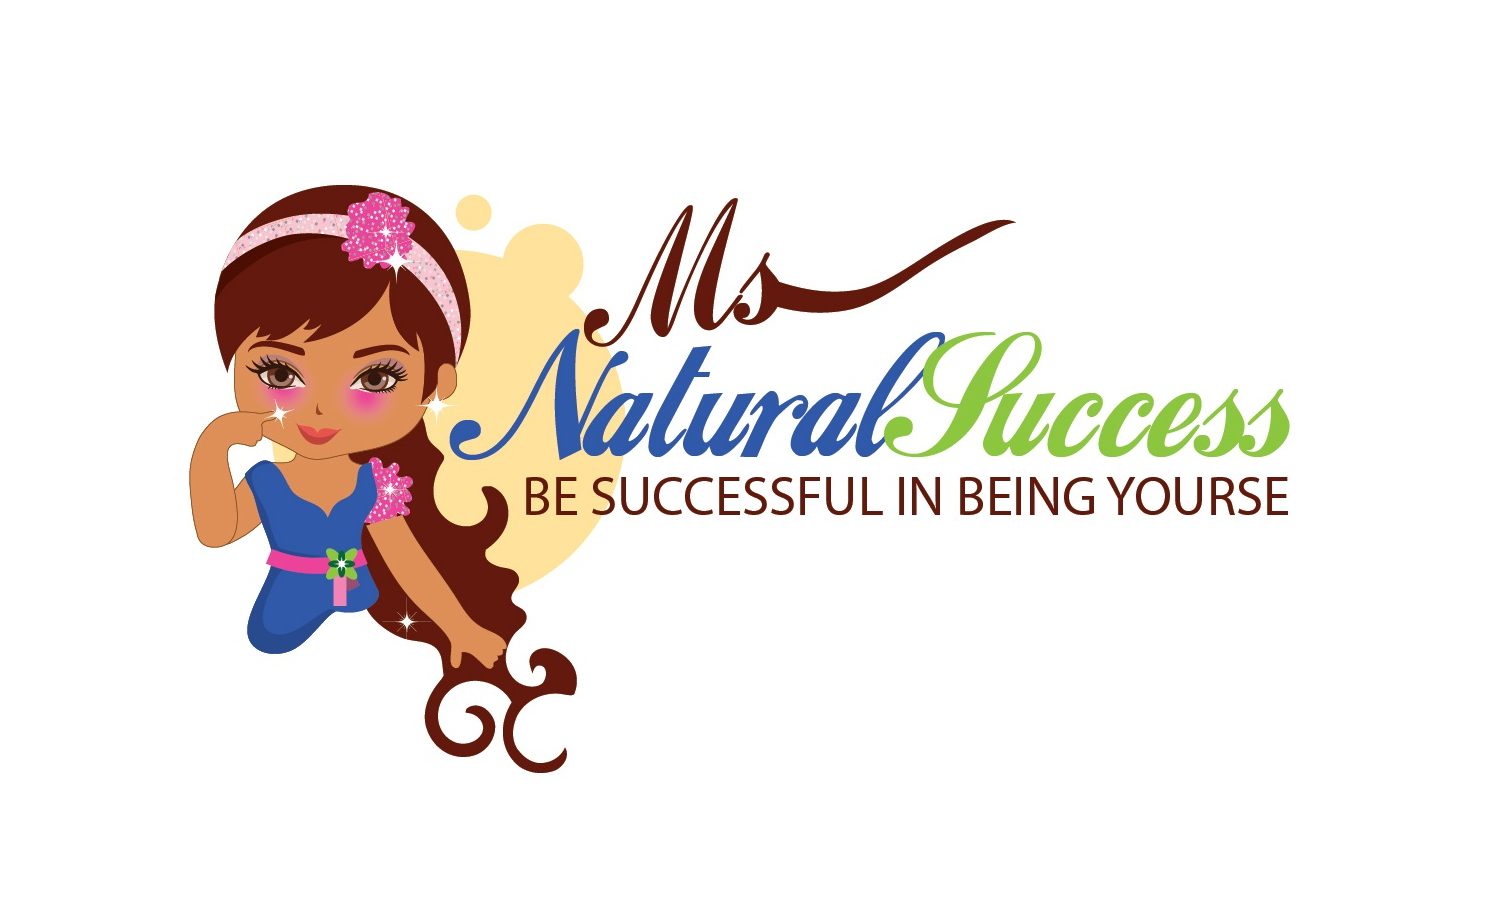 Ms.-Natural-Success